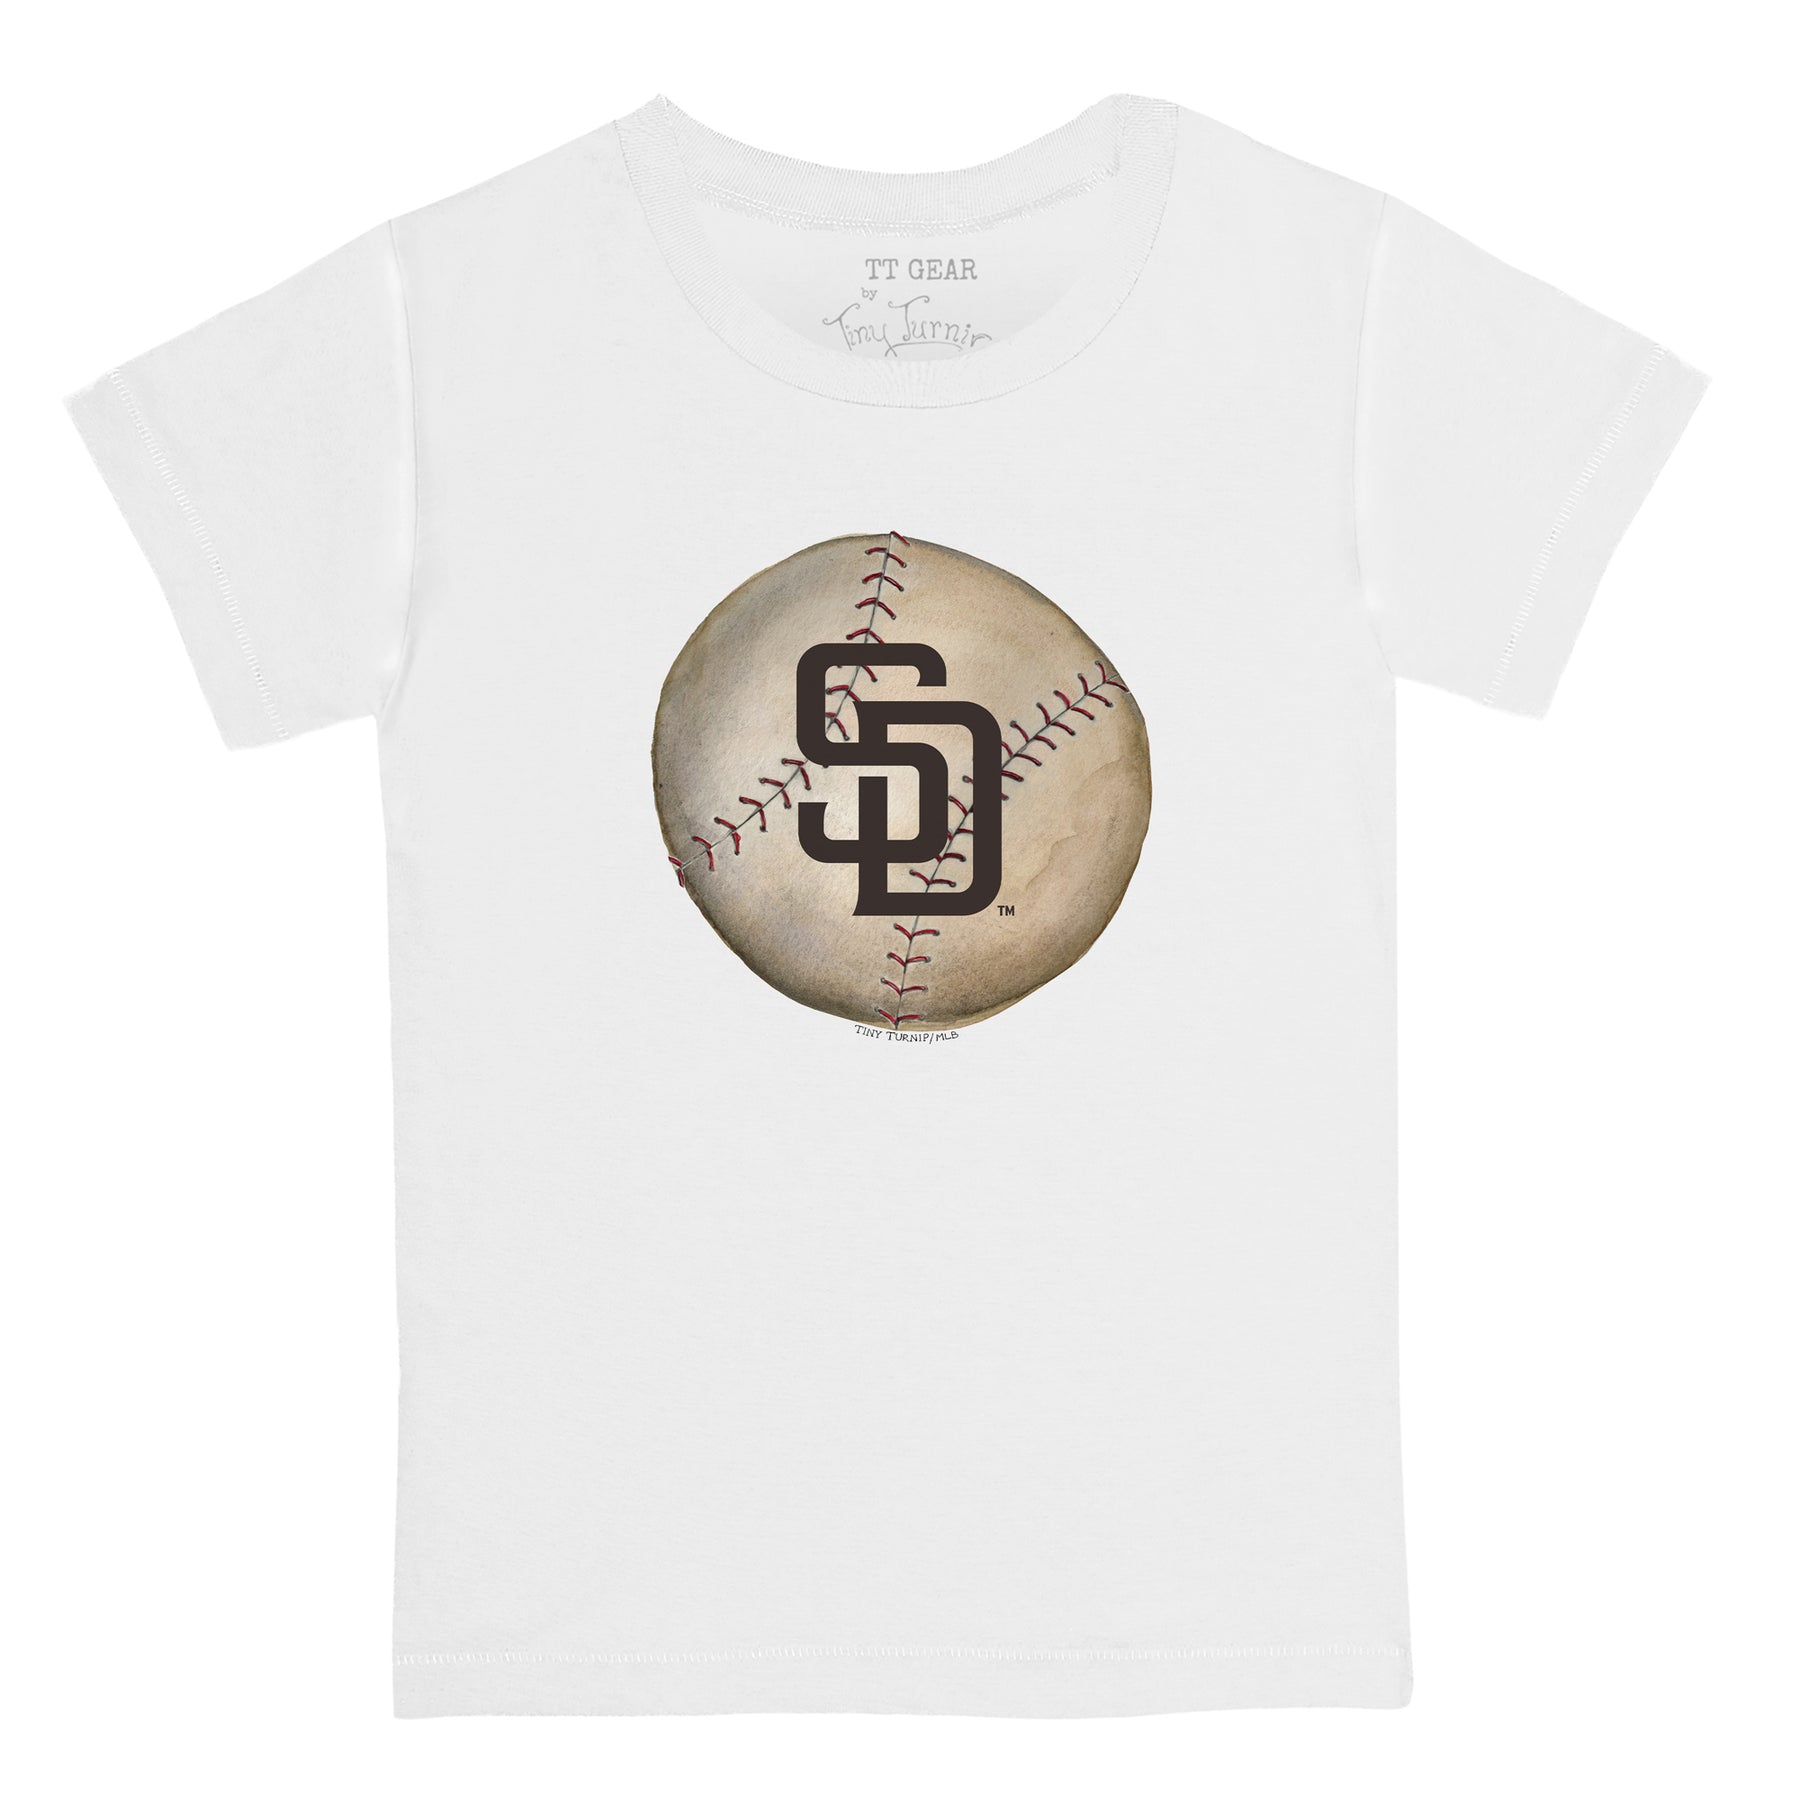 Lids Chicago Cubs Tiny Turnip Toddler Clemente 3/4-Sleeve Raglan T-Shirt -  White/Royal